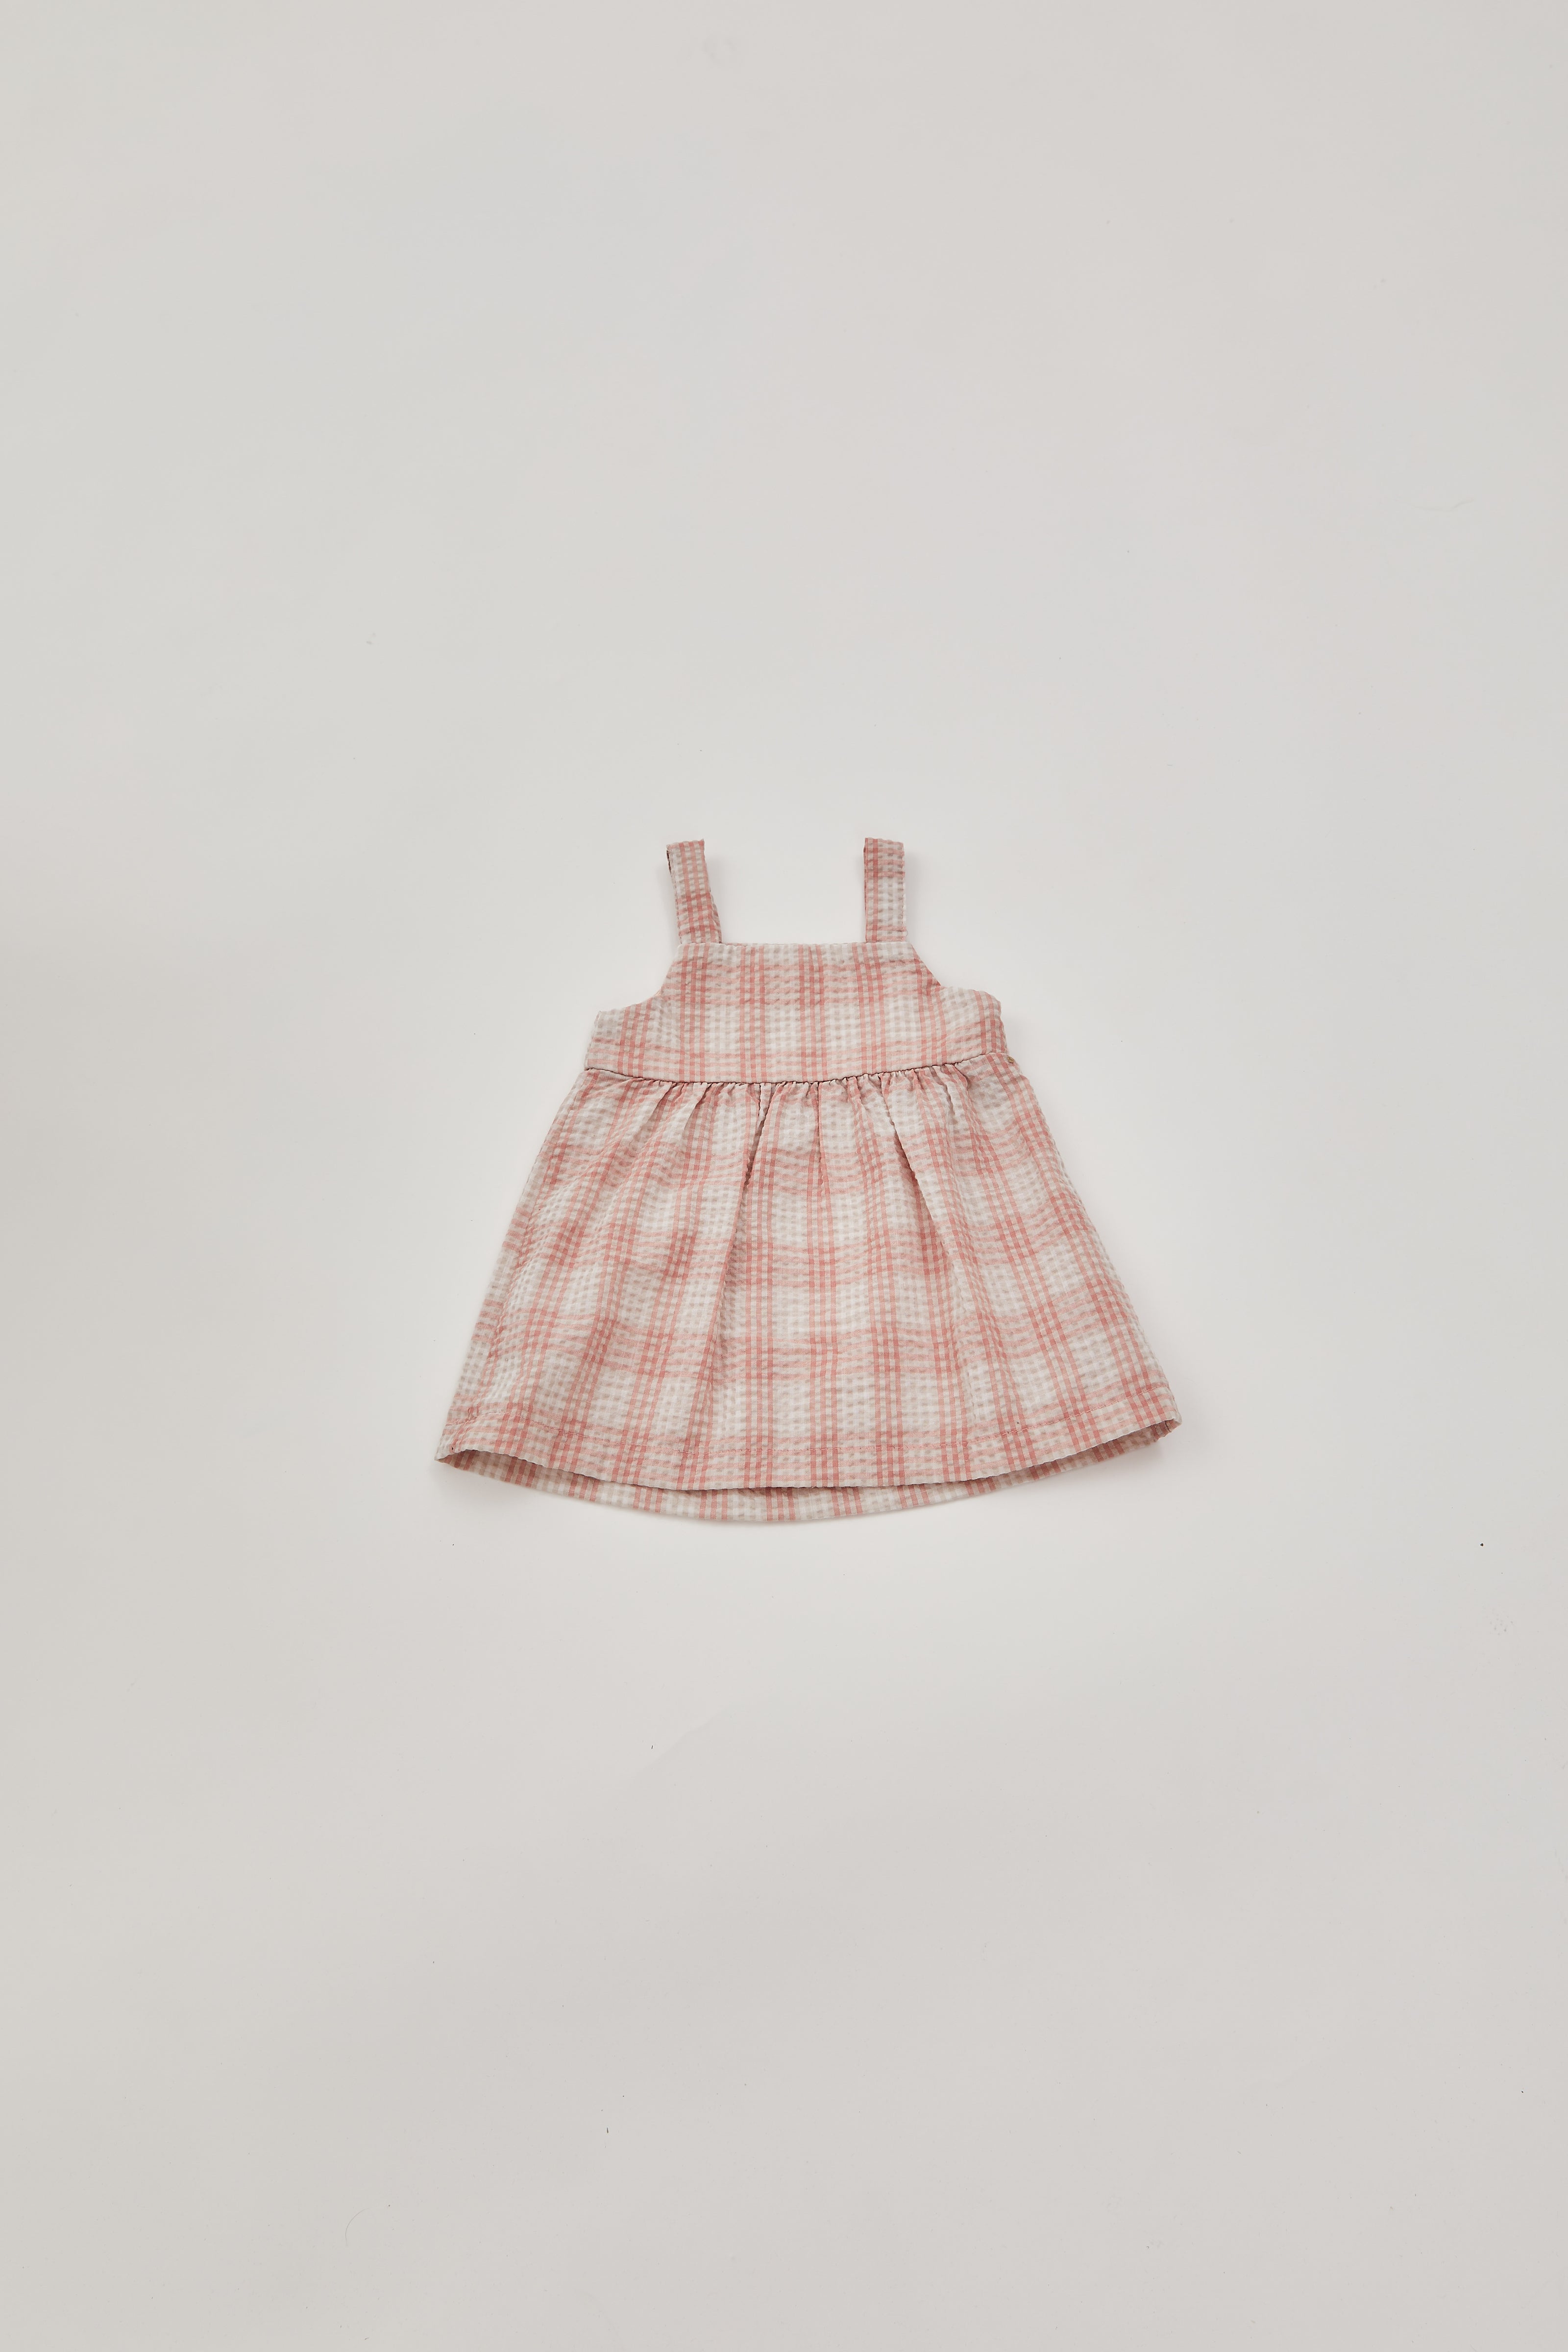 Mini Seersucker Sleeveless Dress in Shell Pink